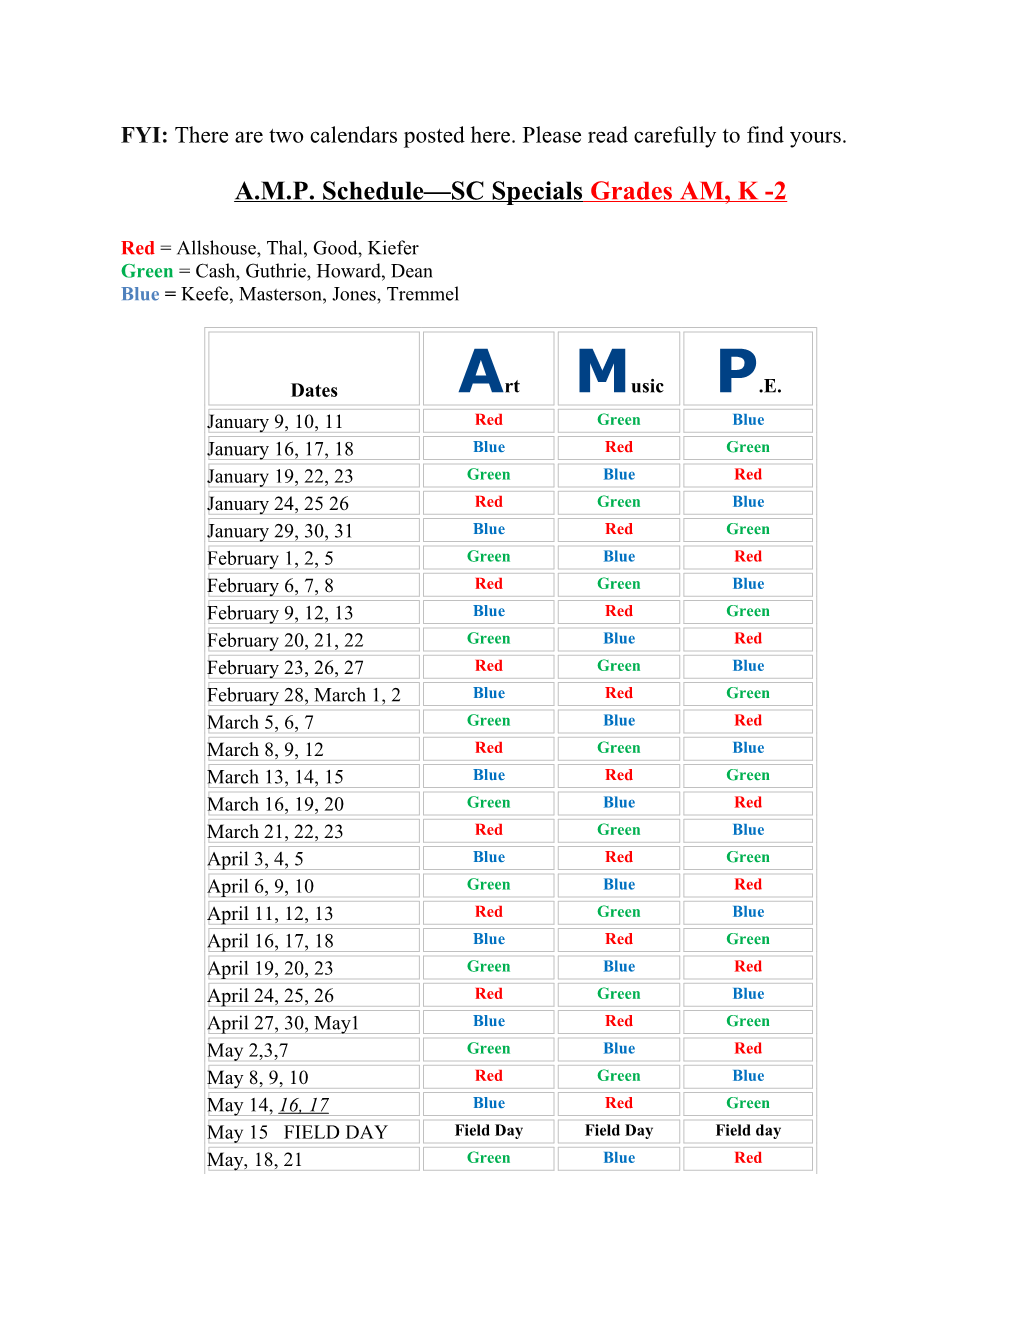 A.M.P. Schedule SC Specials Grades AM, K -2